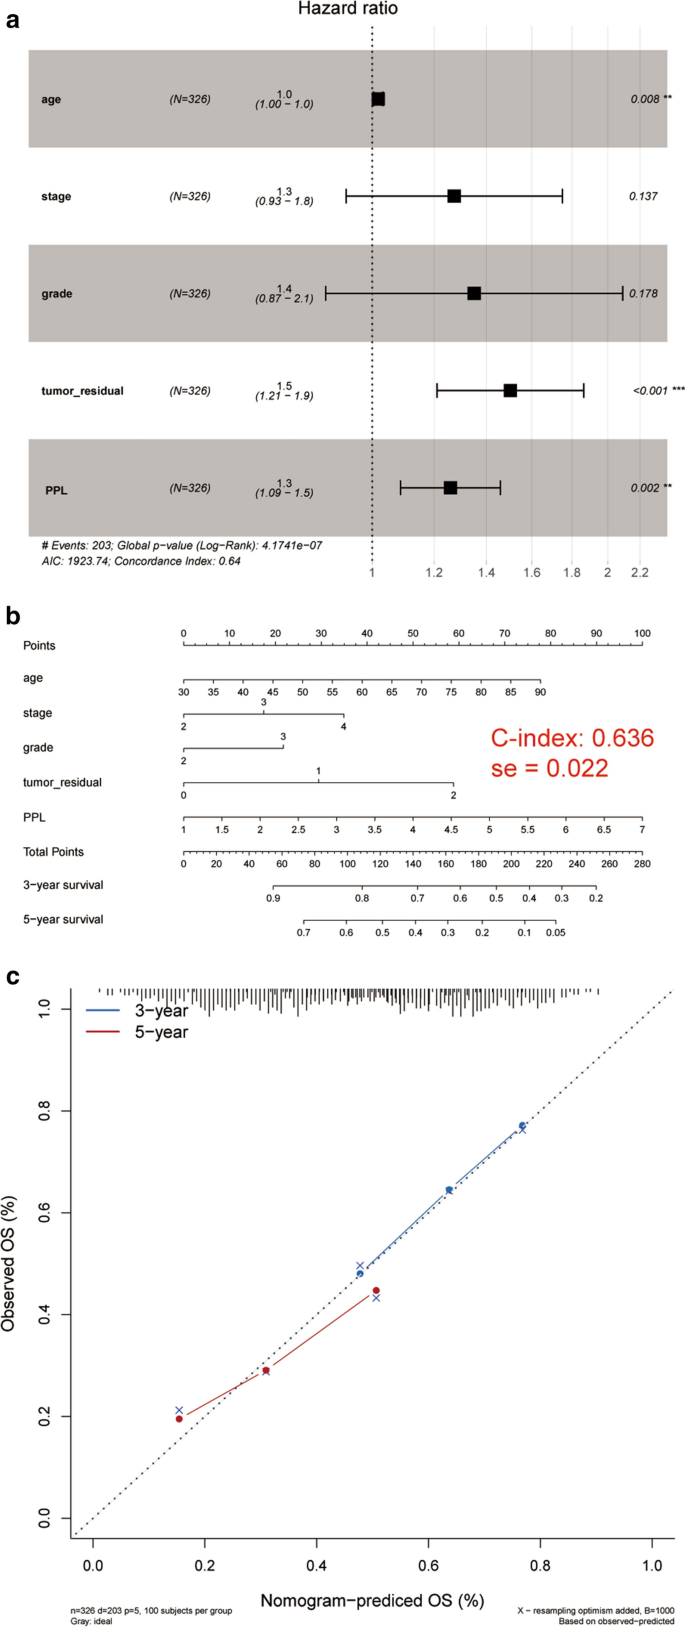 PDF) ACTN4 gene amplification is a predictive biomarker for